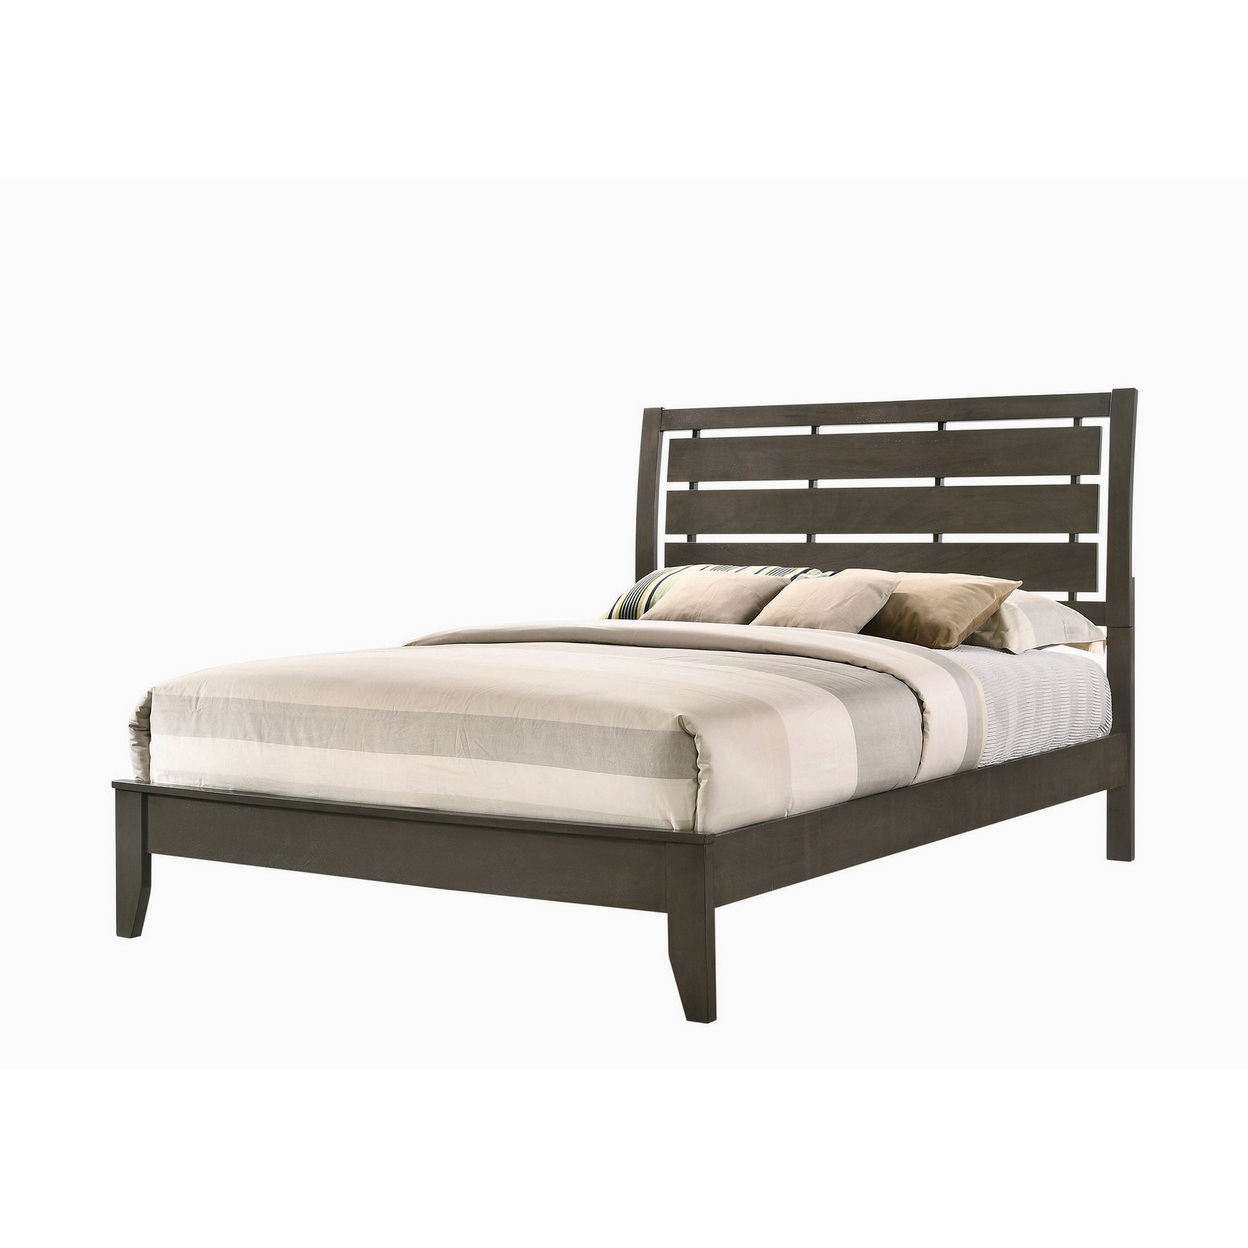 Twin Size Bed, Horizontal Slatted Headboard, Low Platform, Gray Finish- Saltoro Sherpi